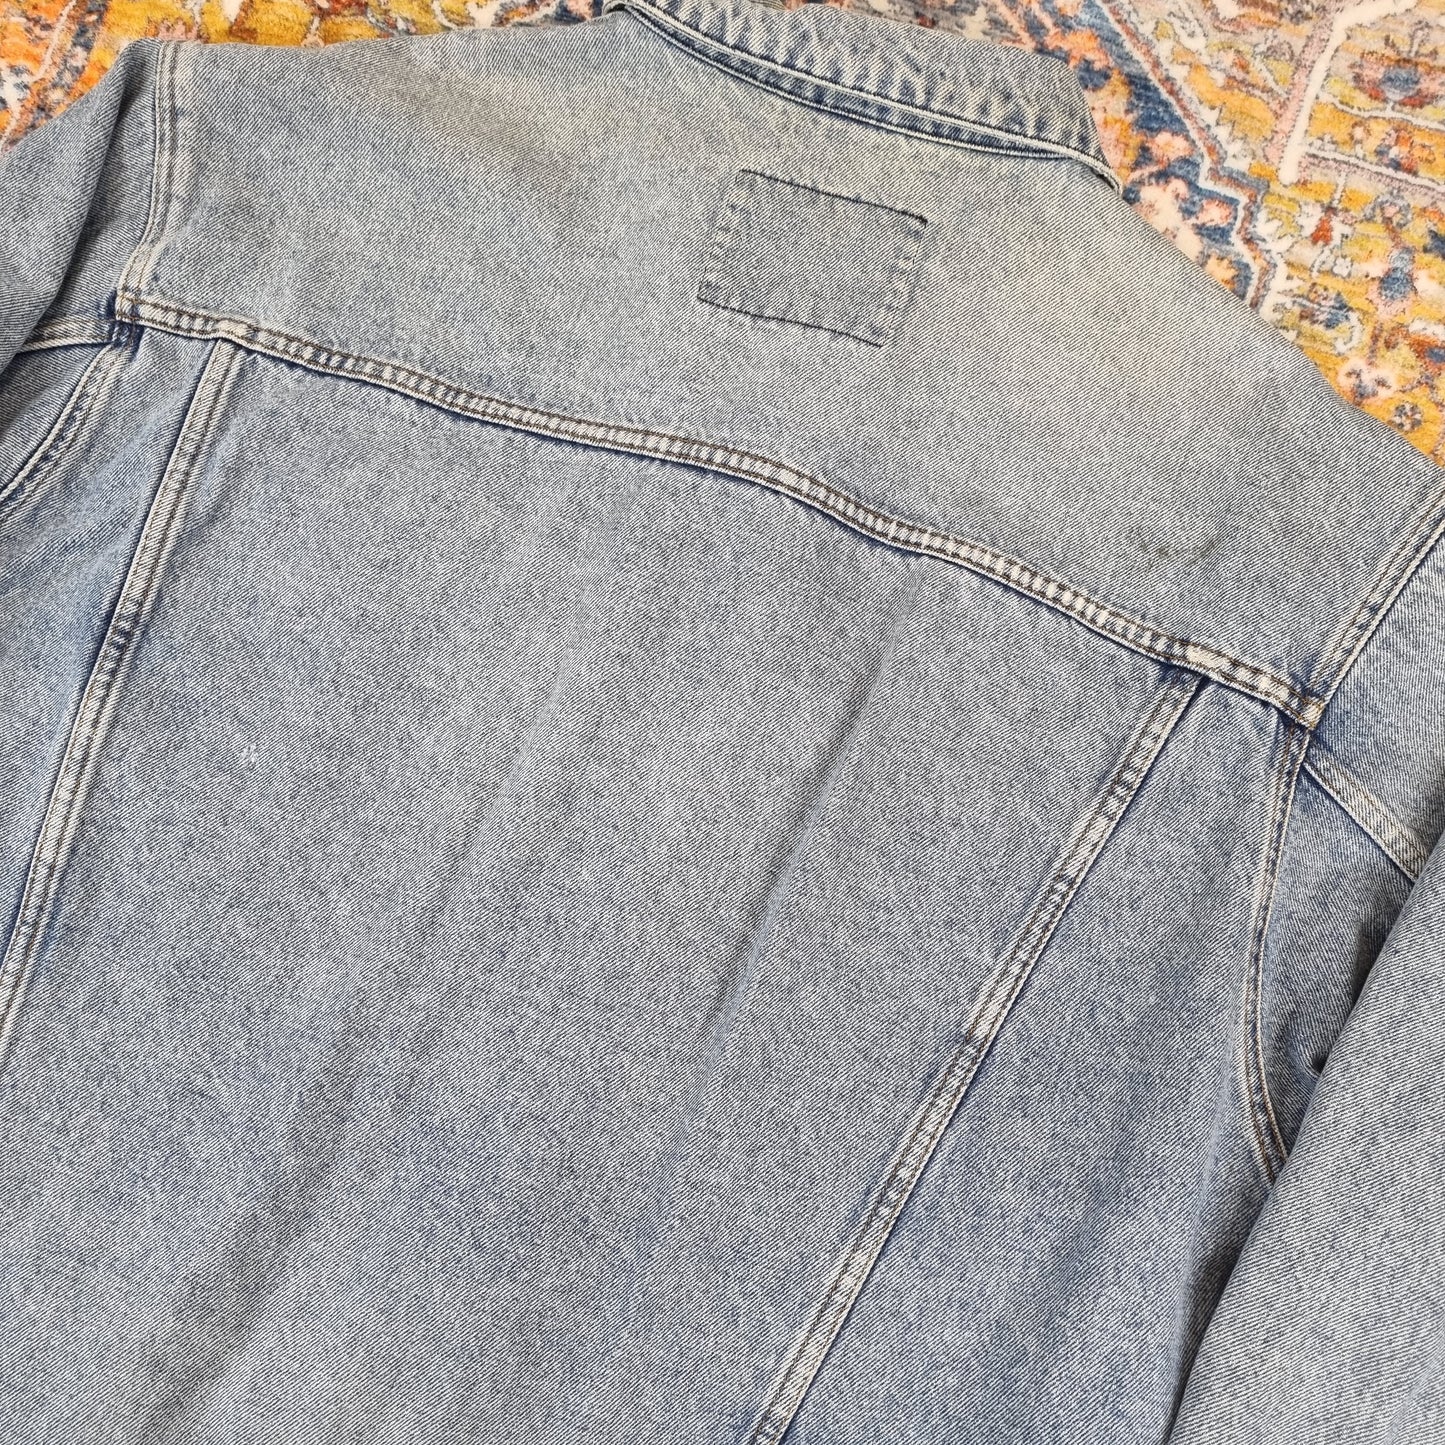 Vintage Avirex Denim Jacket (2XL)